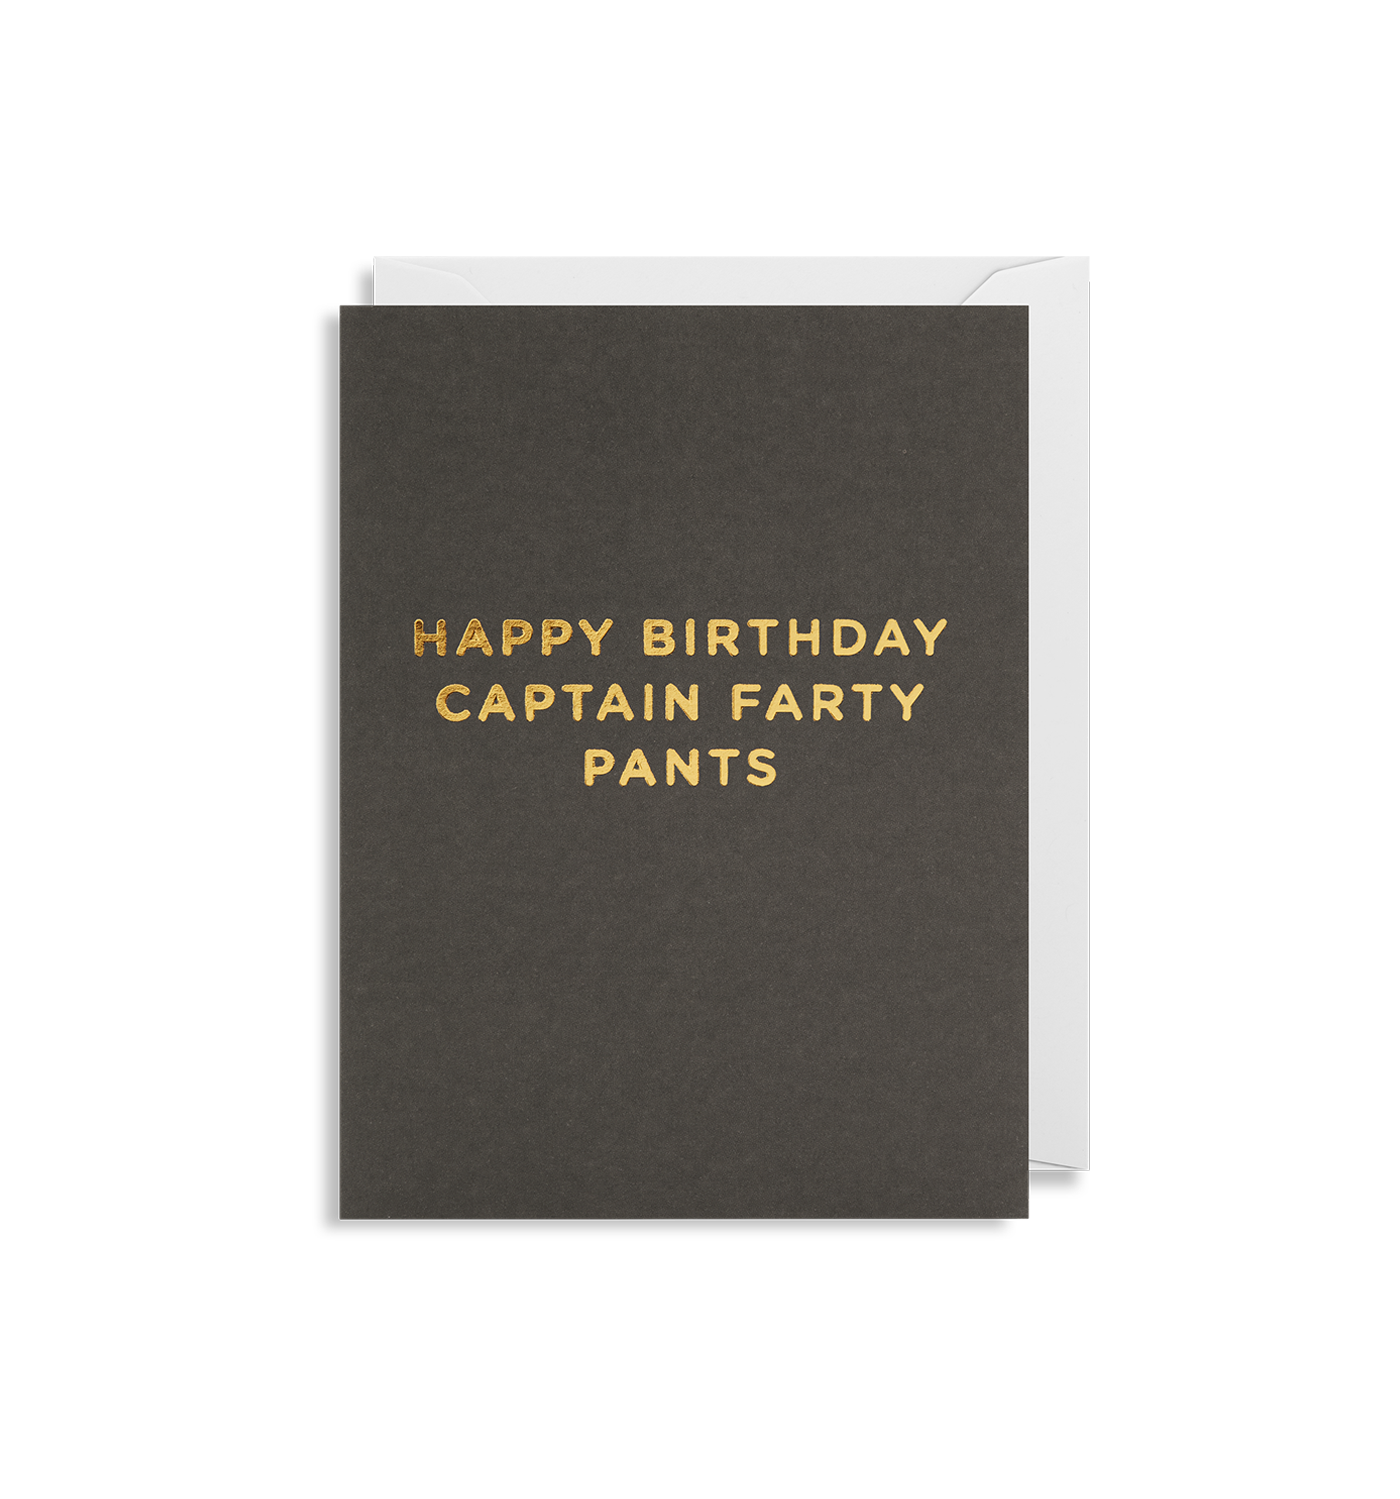 Happy Birthday Captain Farty Pants - Minicard – Spektakular Ltd